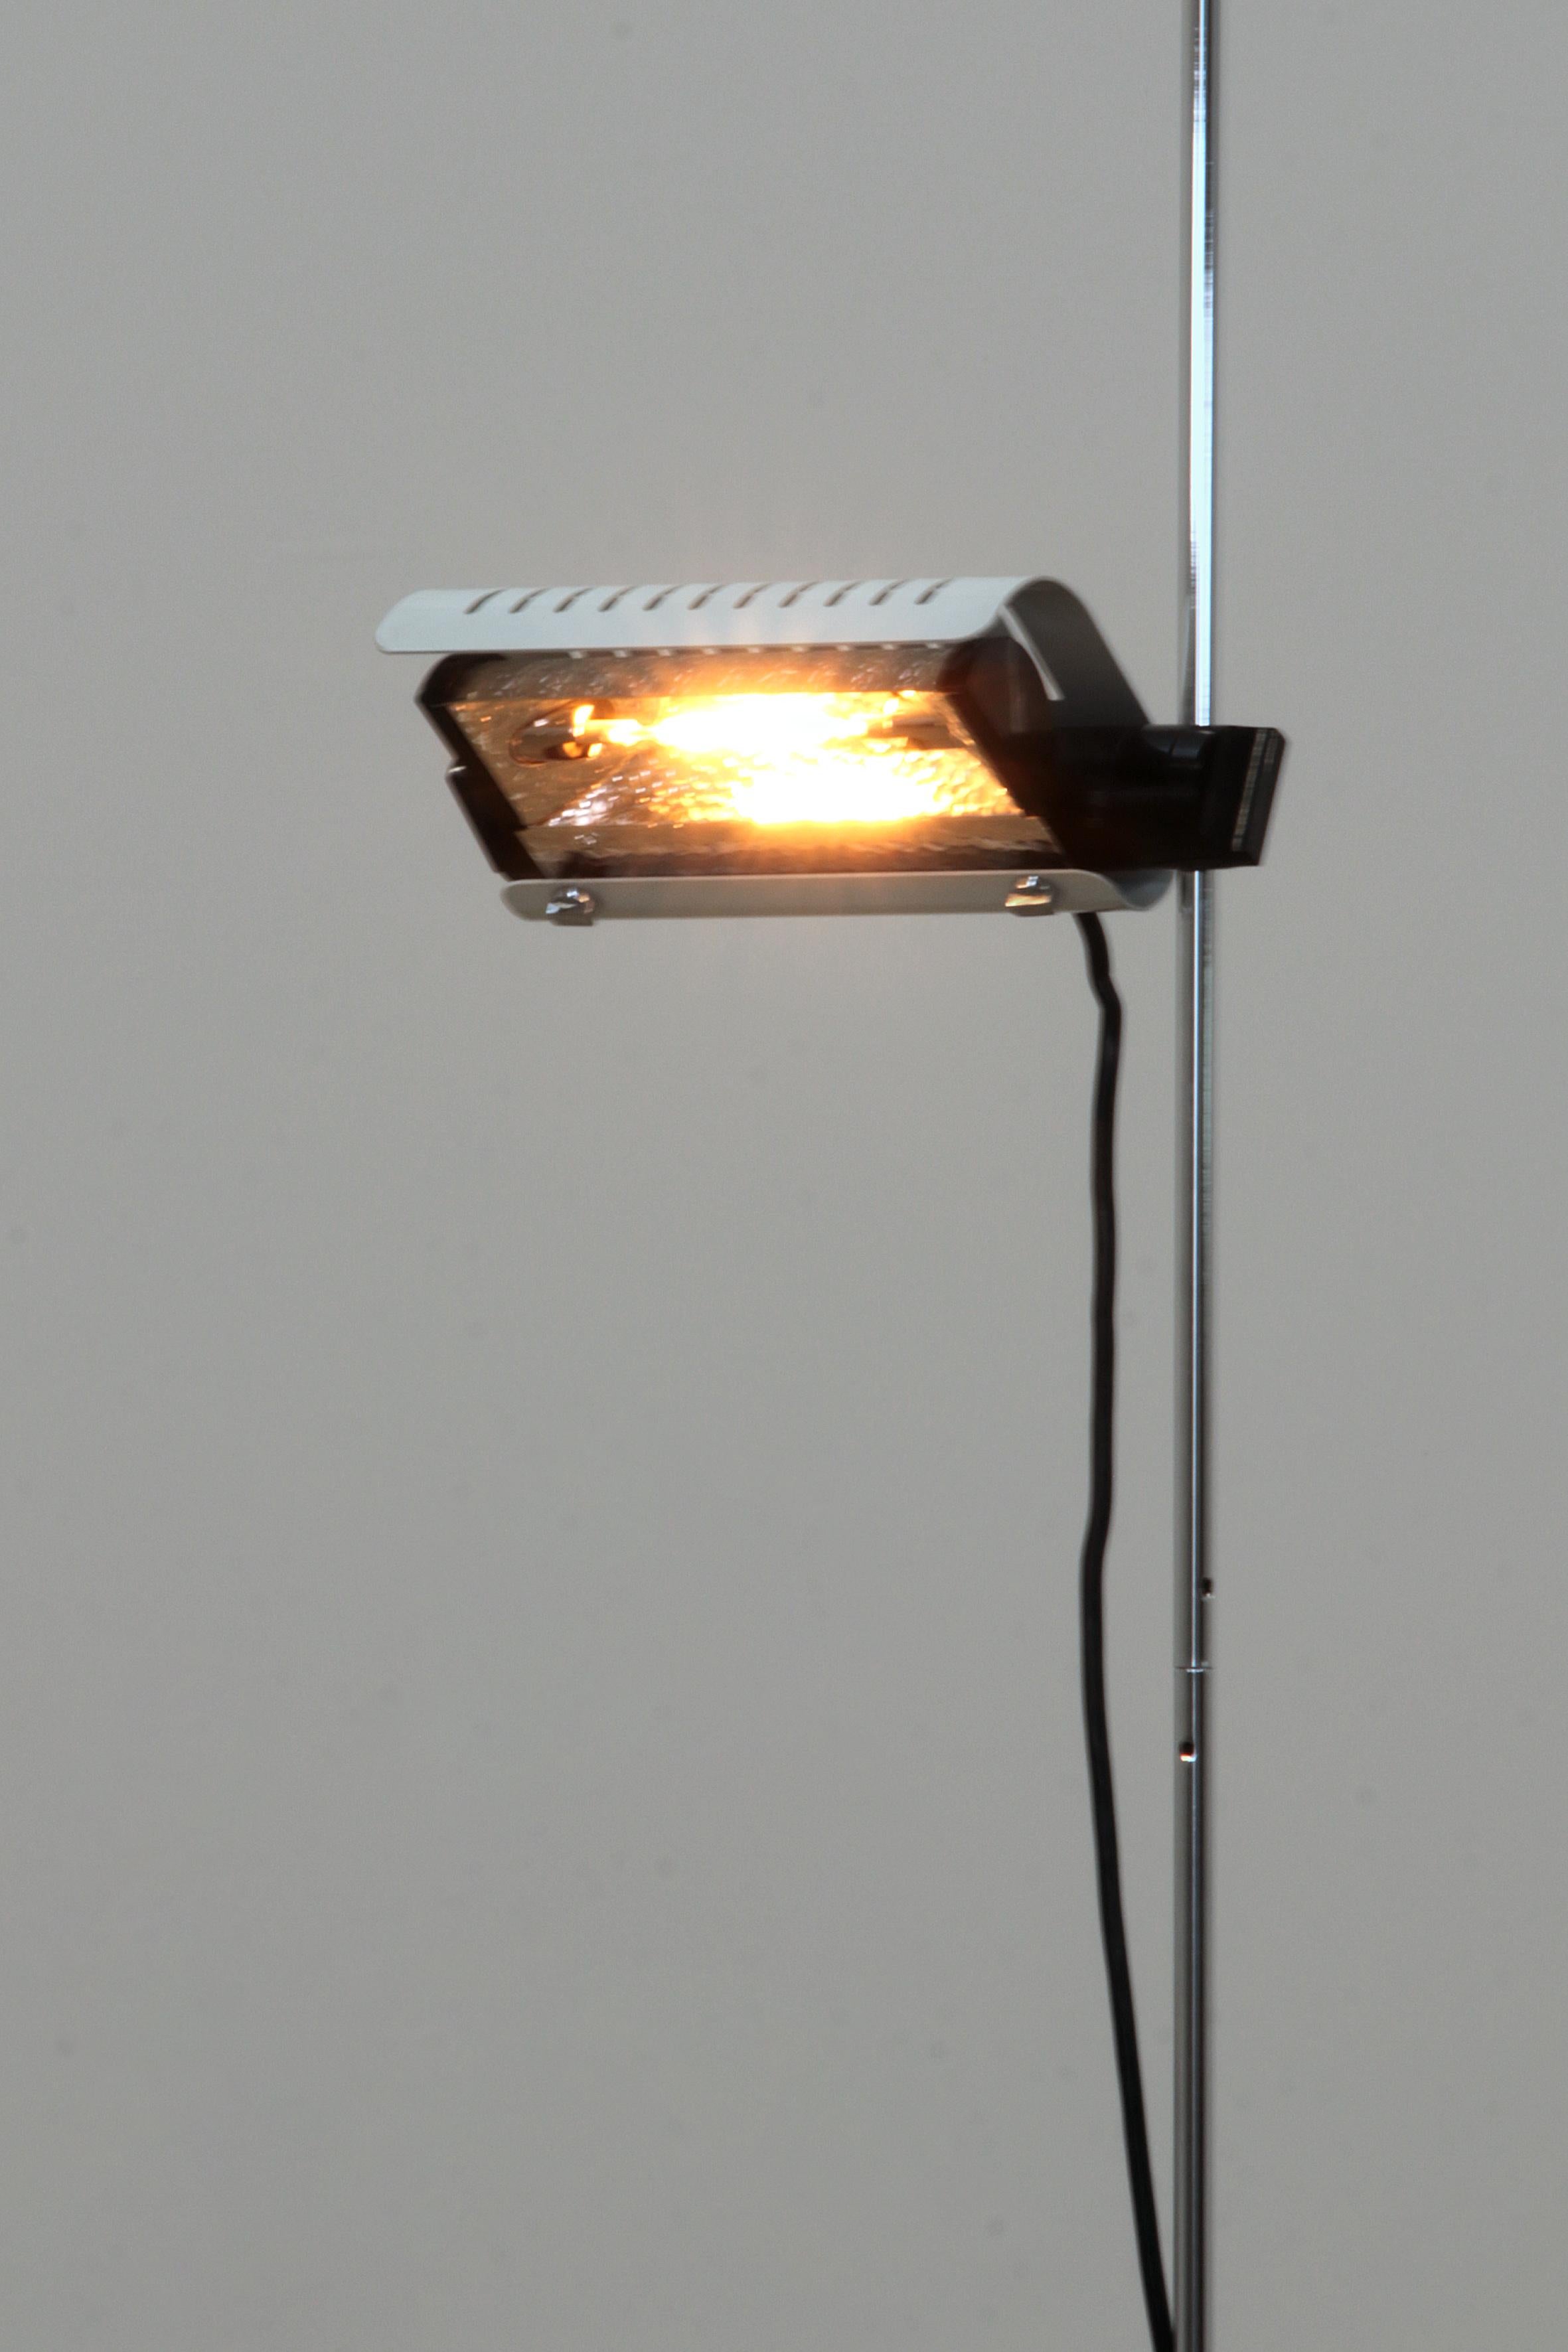 Italian Design Joe Colombo Floor Lamp Model Oluce 626 made in the 1970s